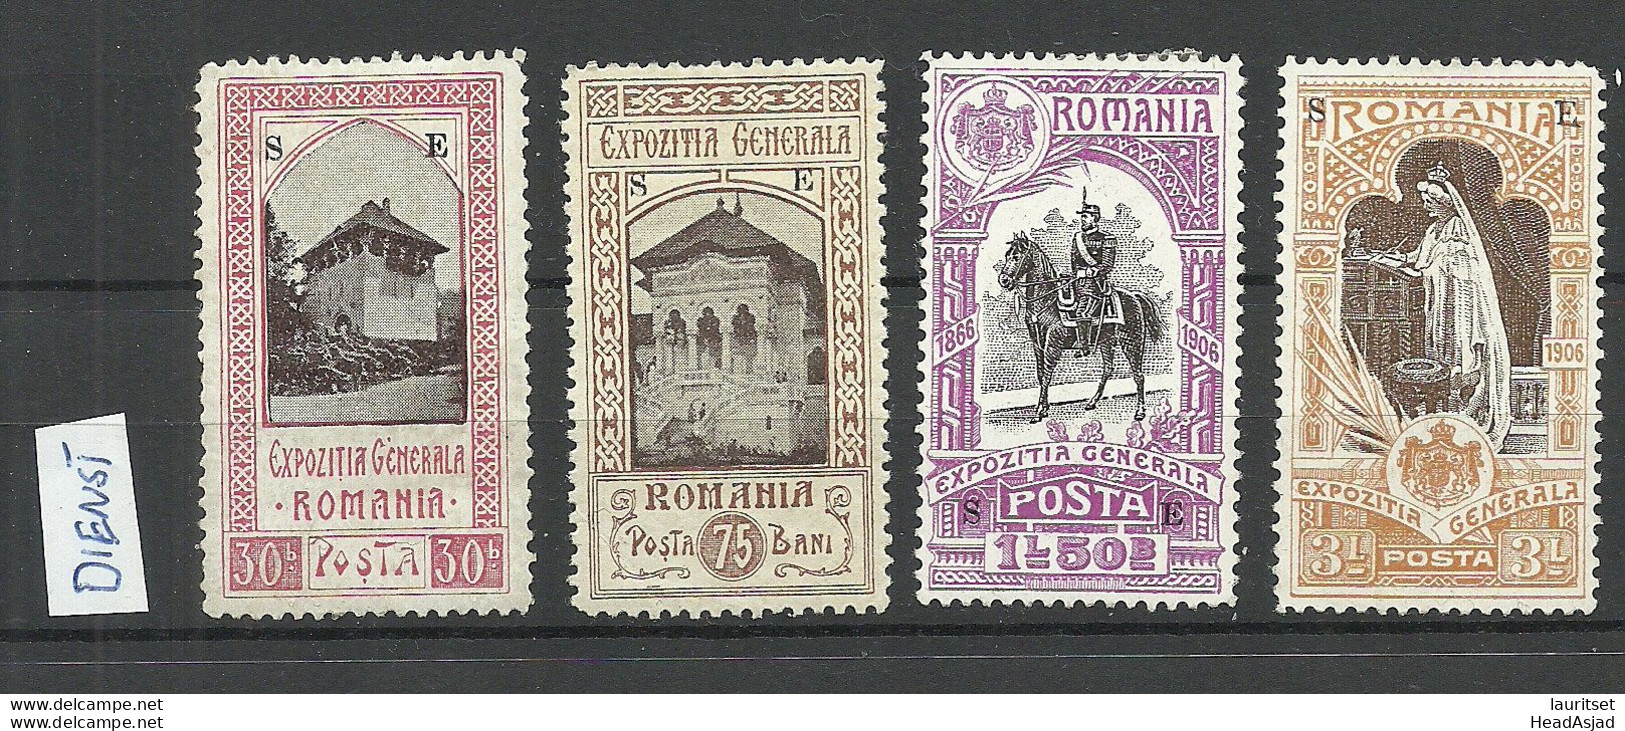 ROMANIA Rumänien 1906 - 4 Dienstmarke EXPOZITIA GENERALA With OPT "SE" * - Officials